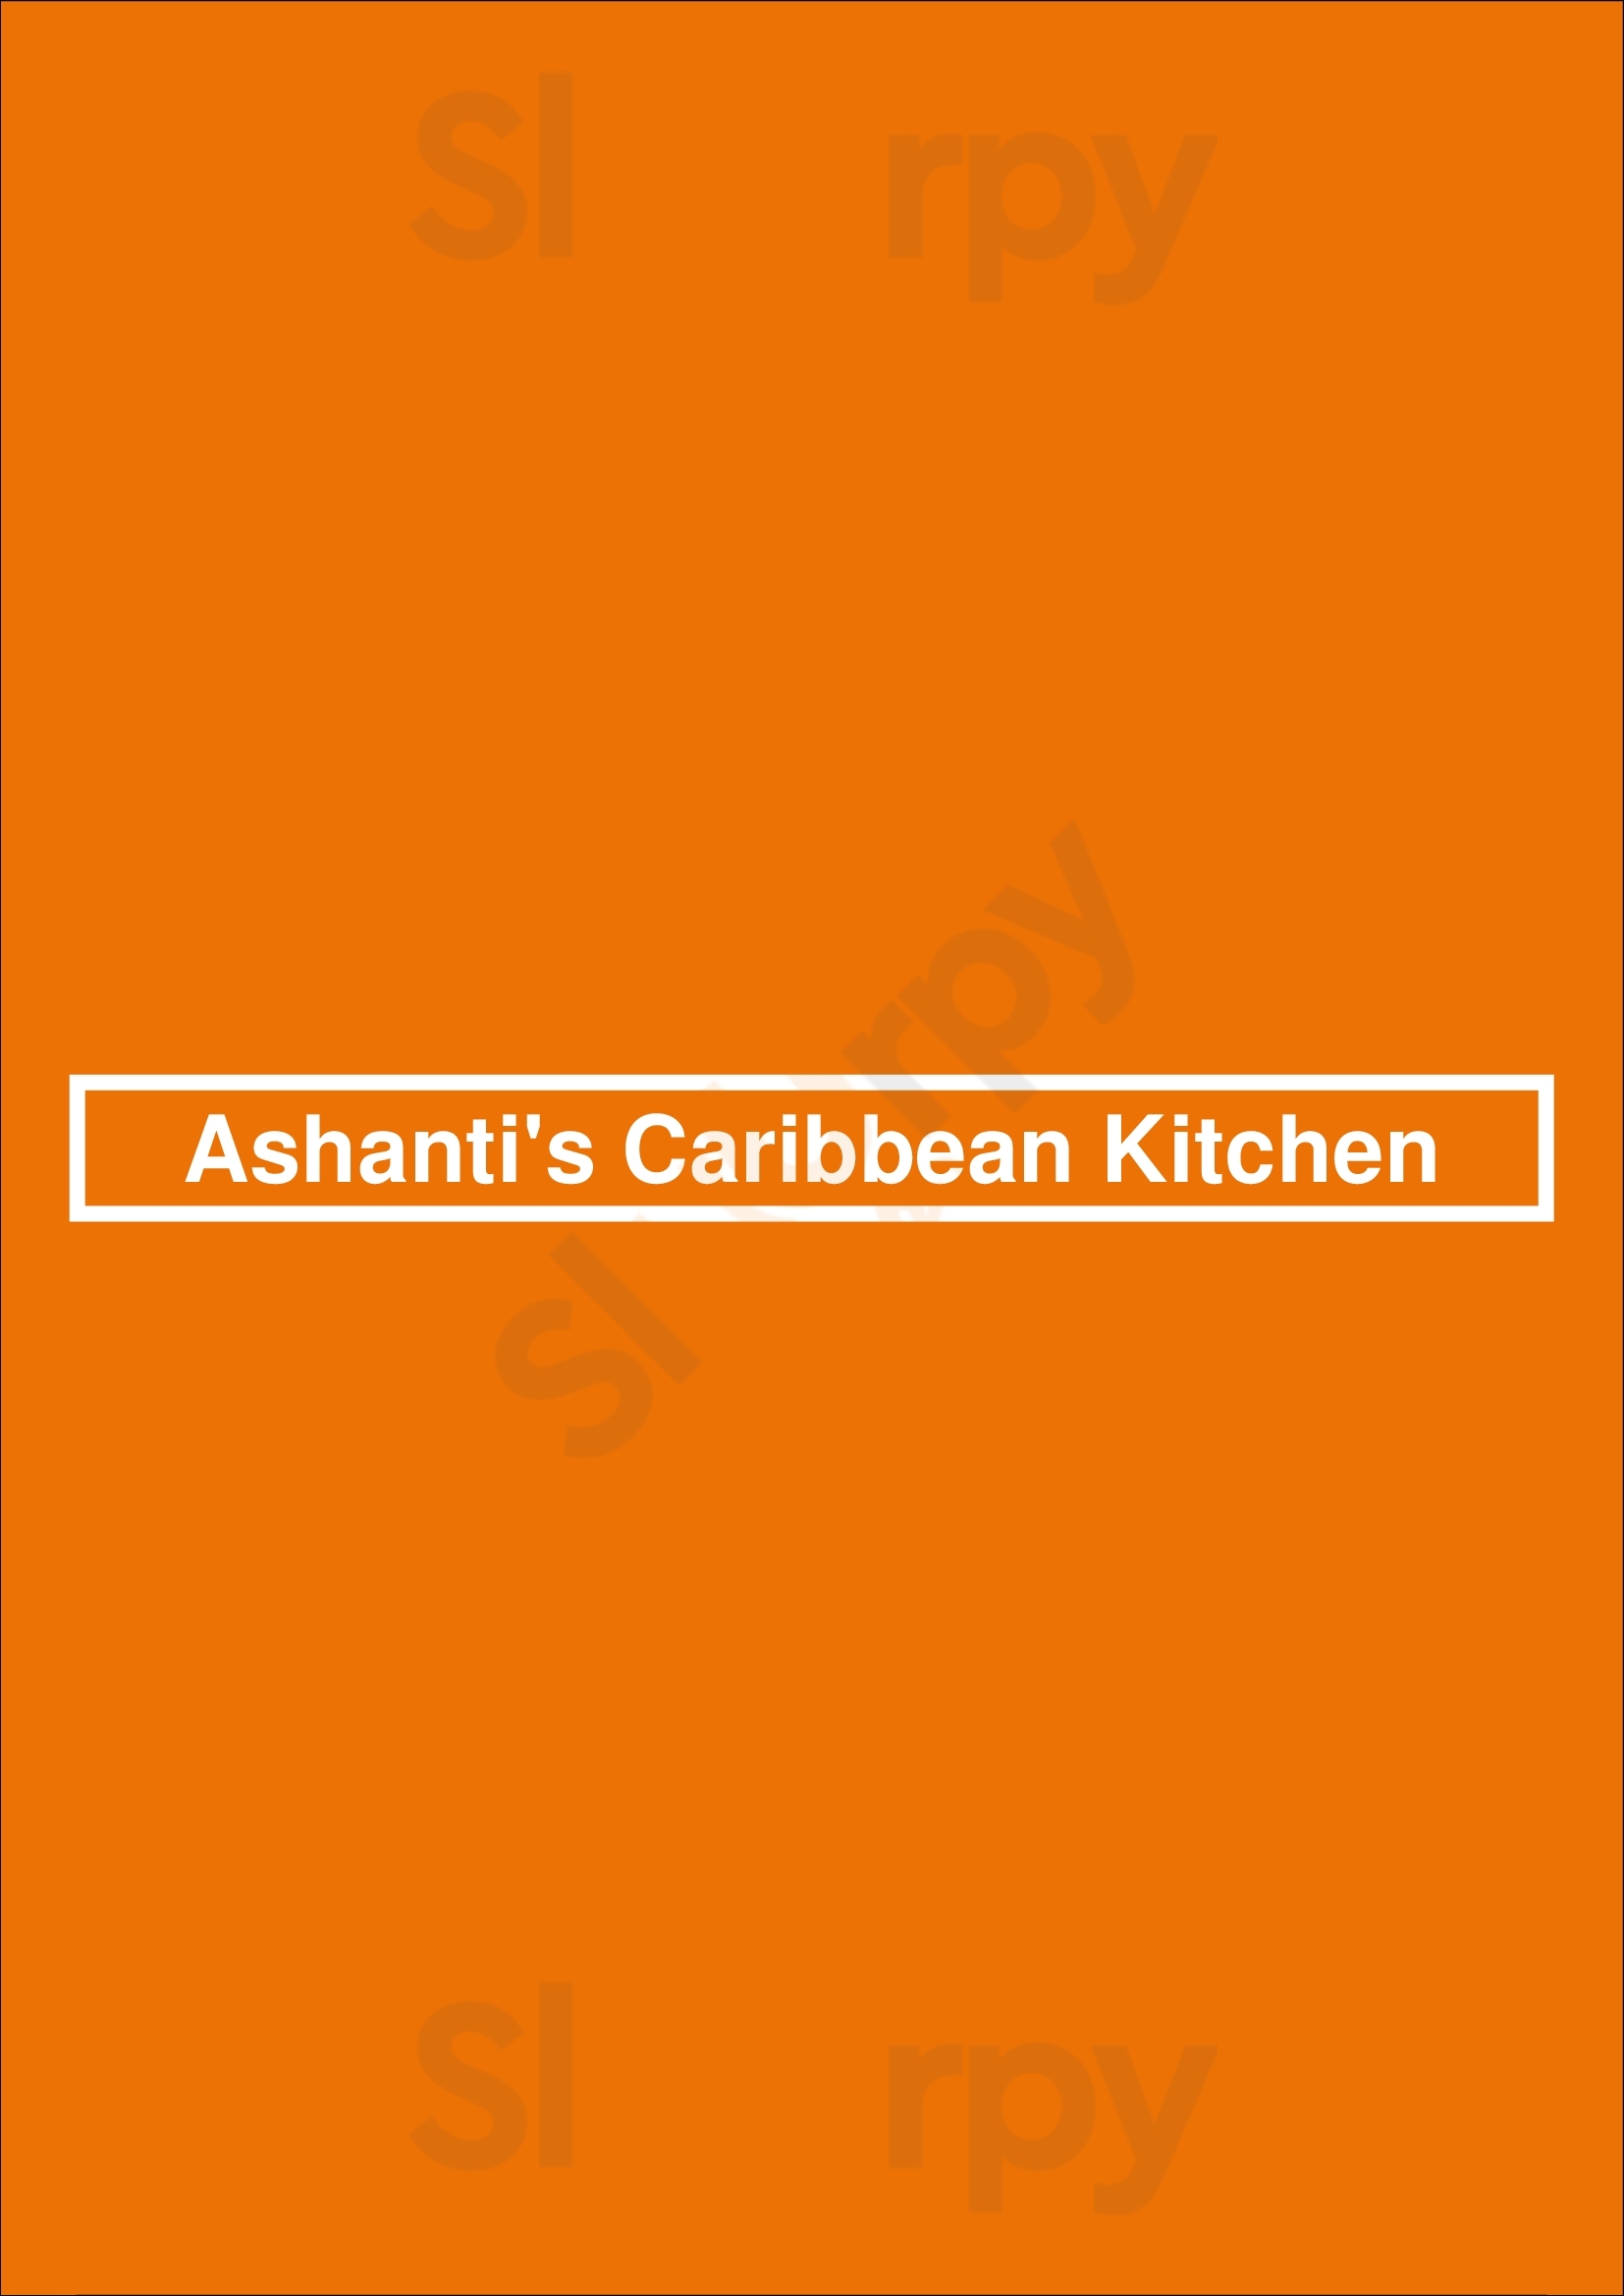 Ashanti's Caribbean Kitchen Las Vegas Menu - 1